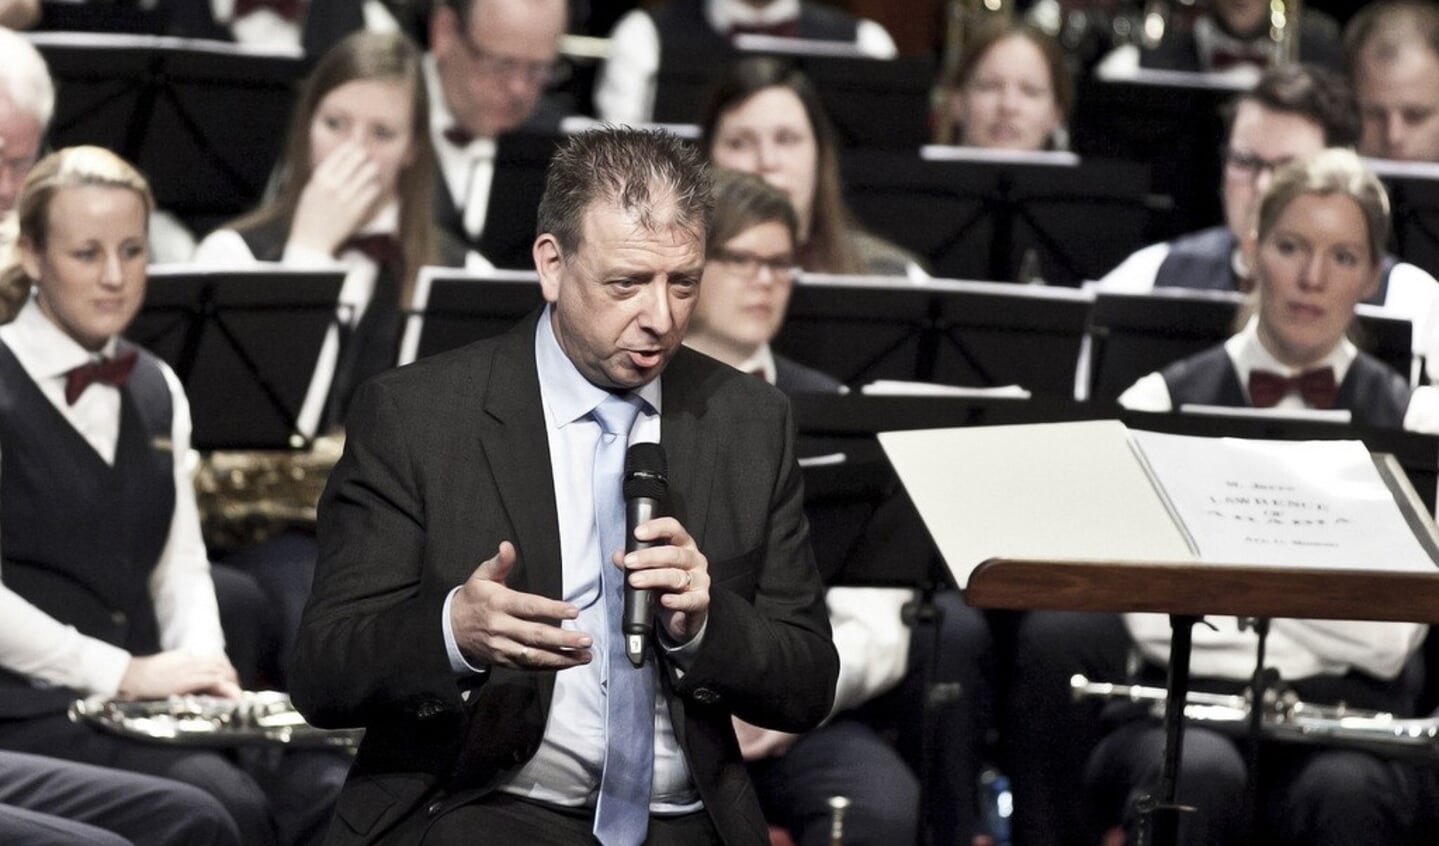 Heesch - Kennismakingsconcert nieuwe dirigent Aurora